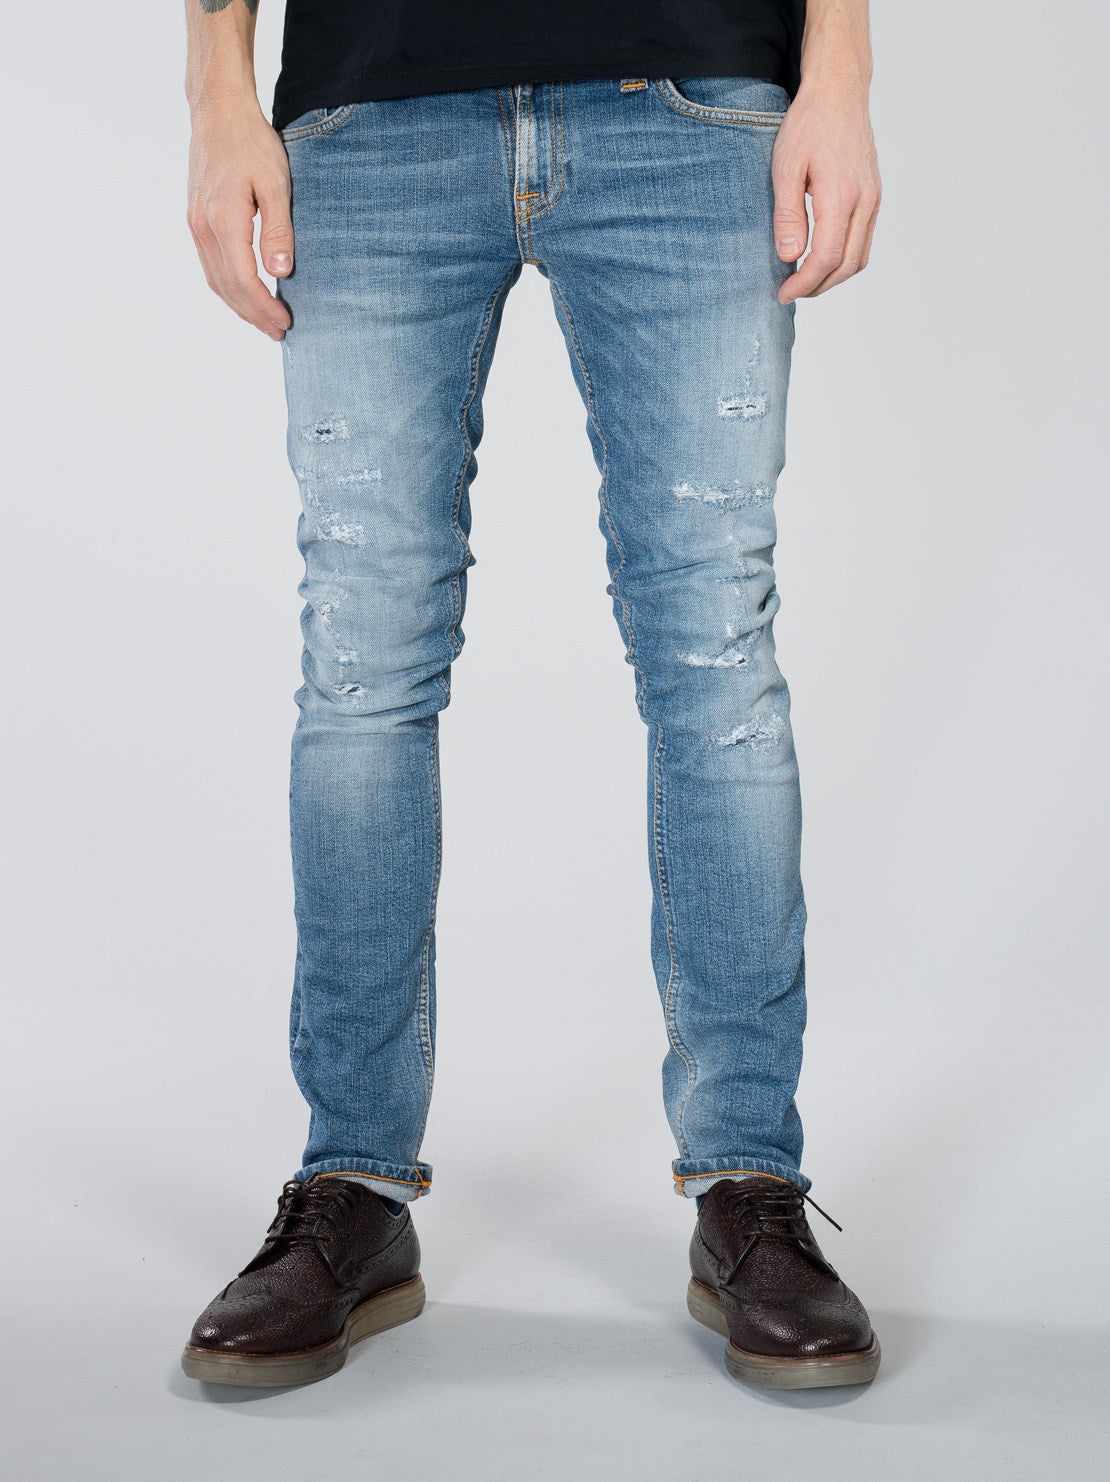 Nudie Jeans Tight Long John Stian Replicar